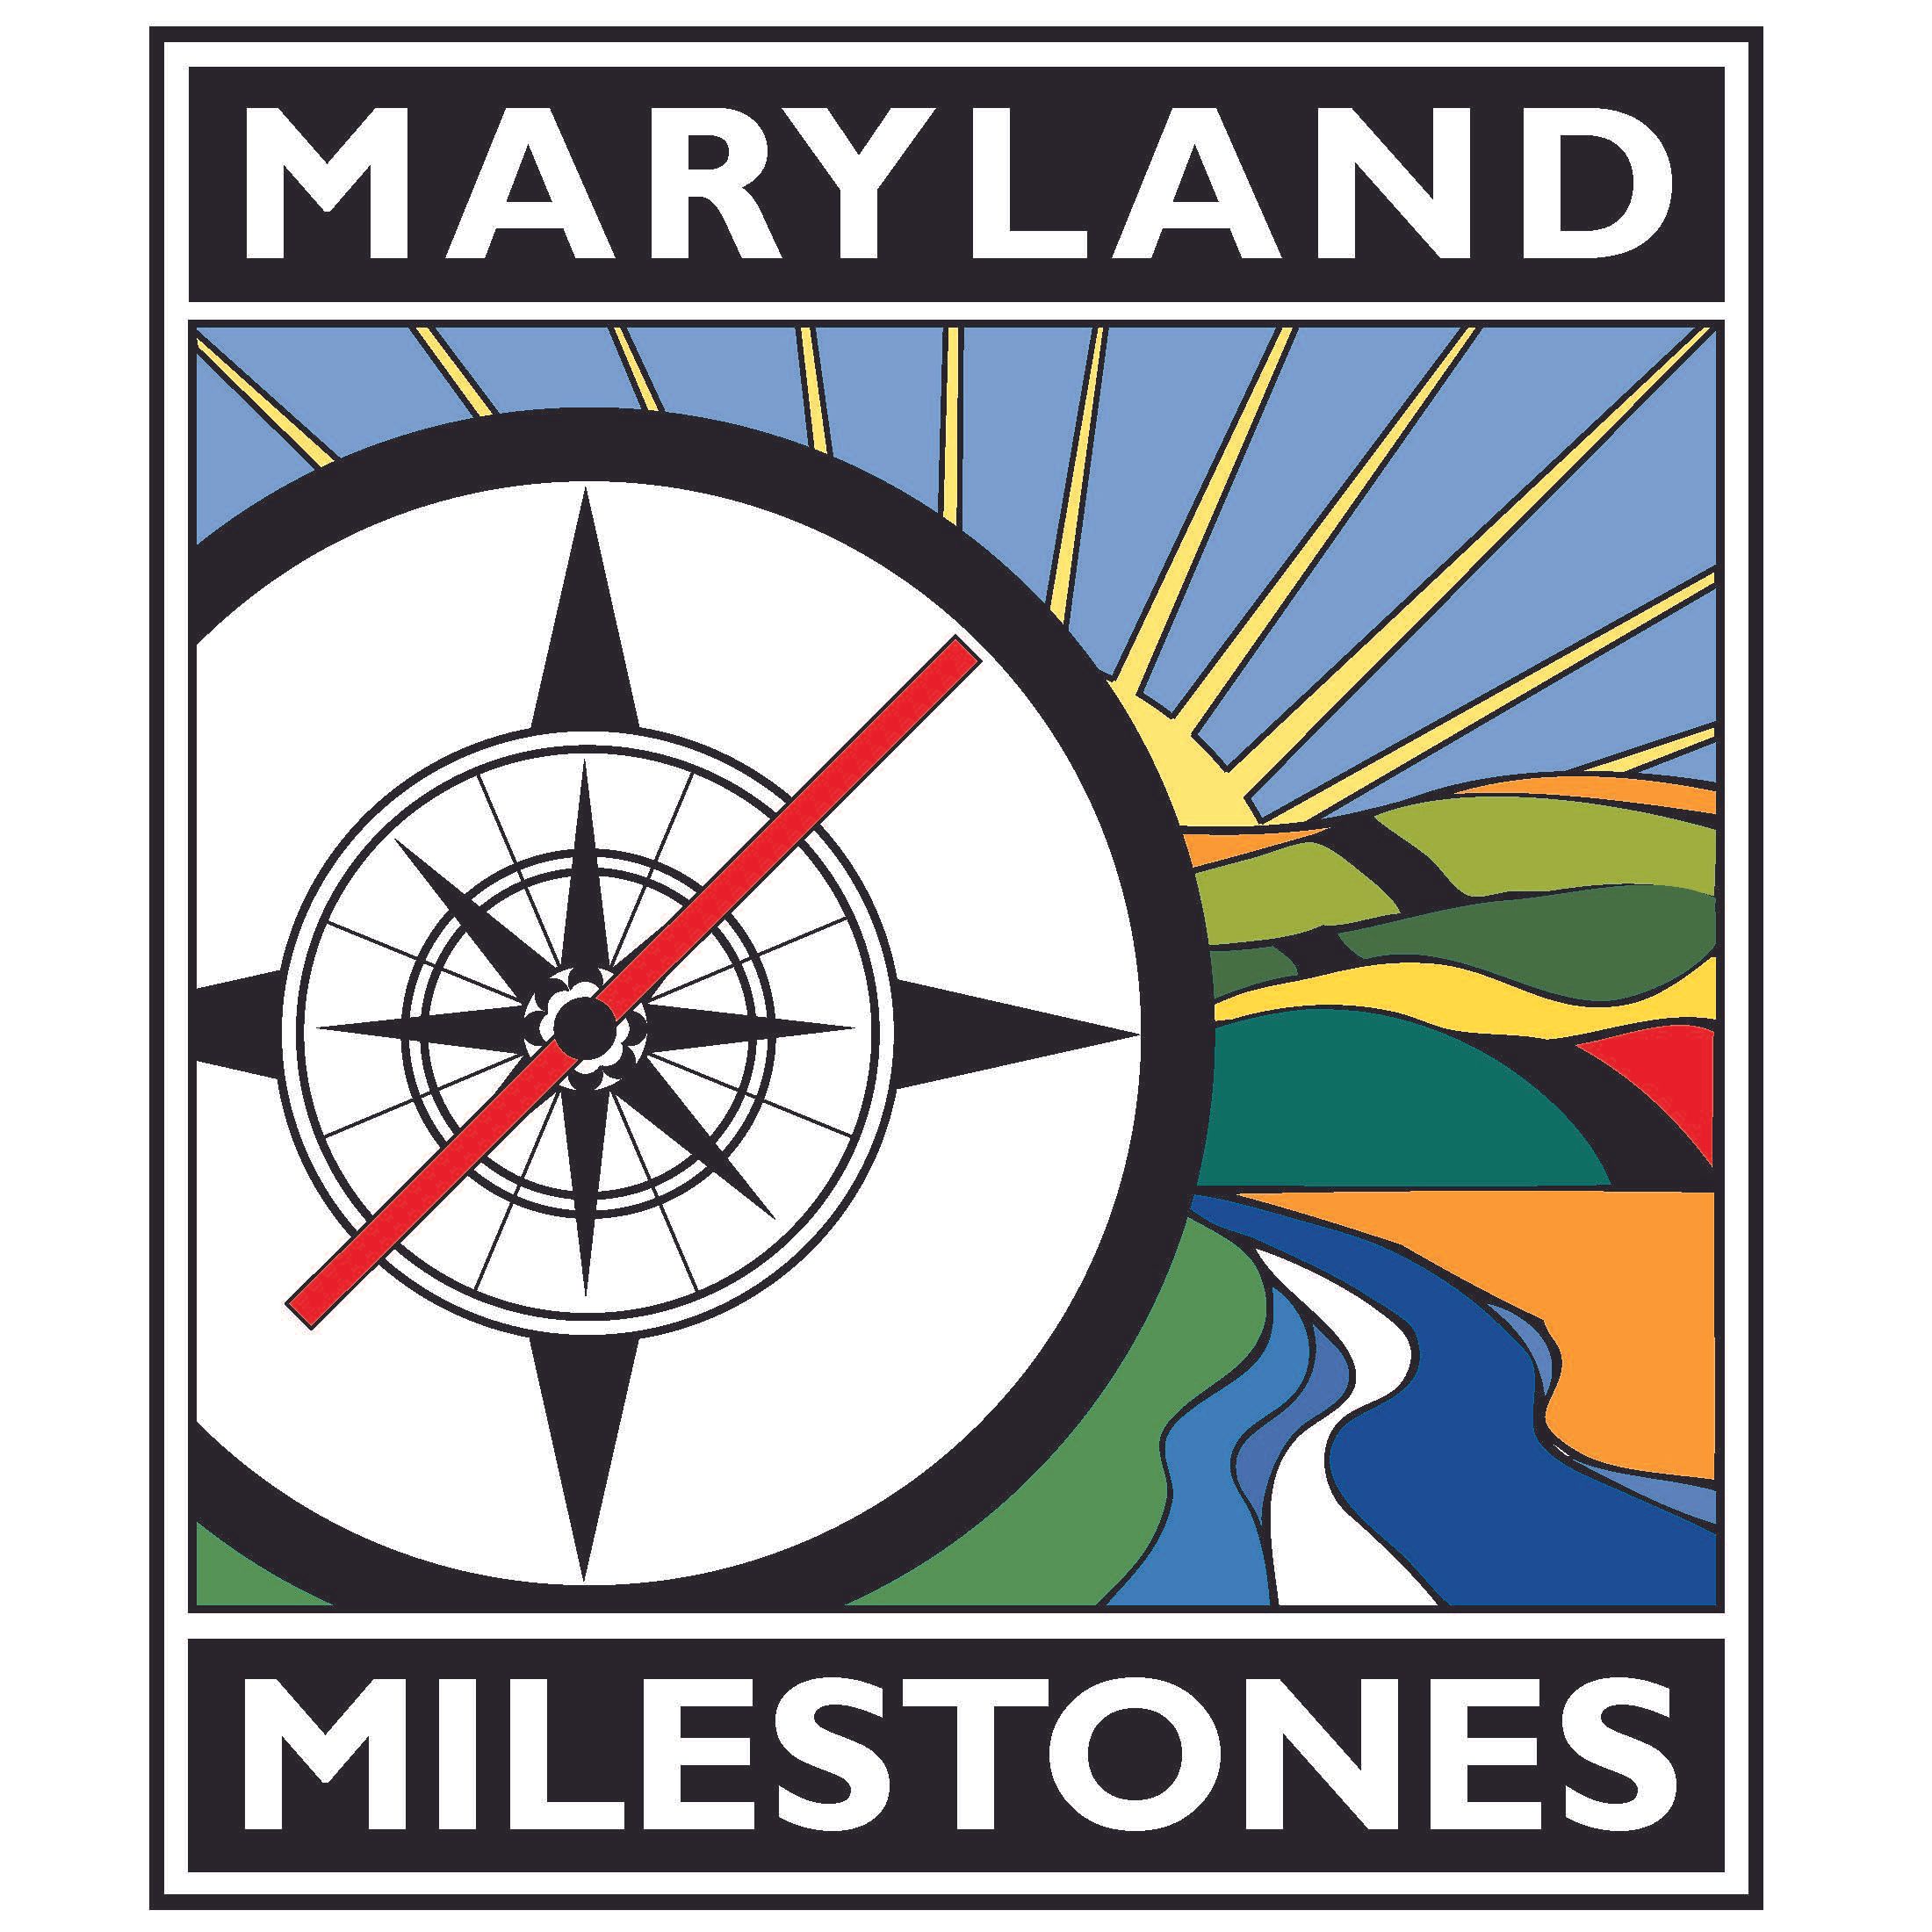 Maryland Milestones